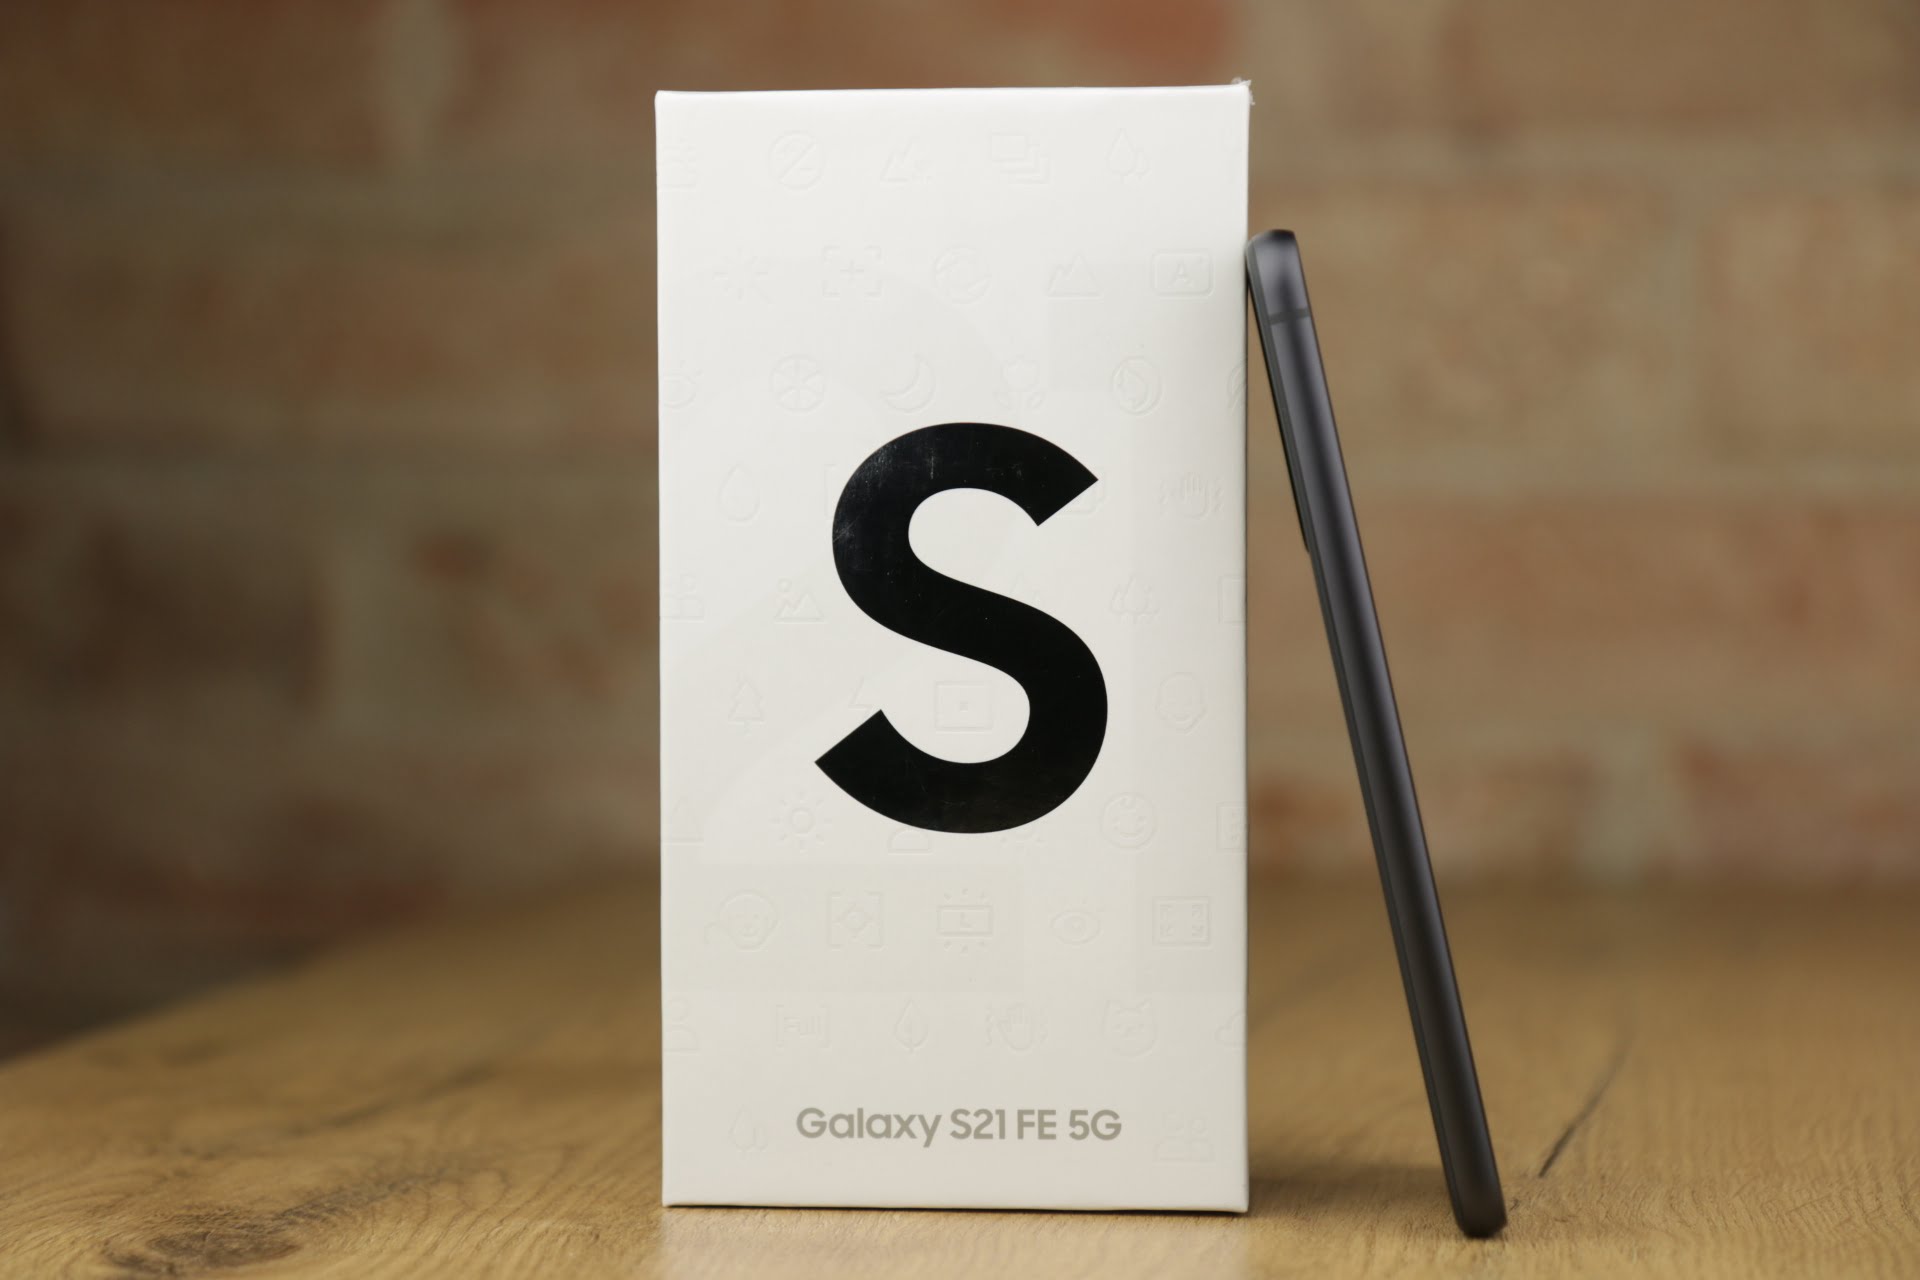 Samsung Galaxy S21 FE recenzja test opinia